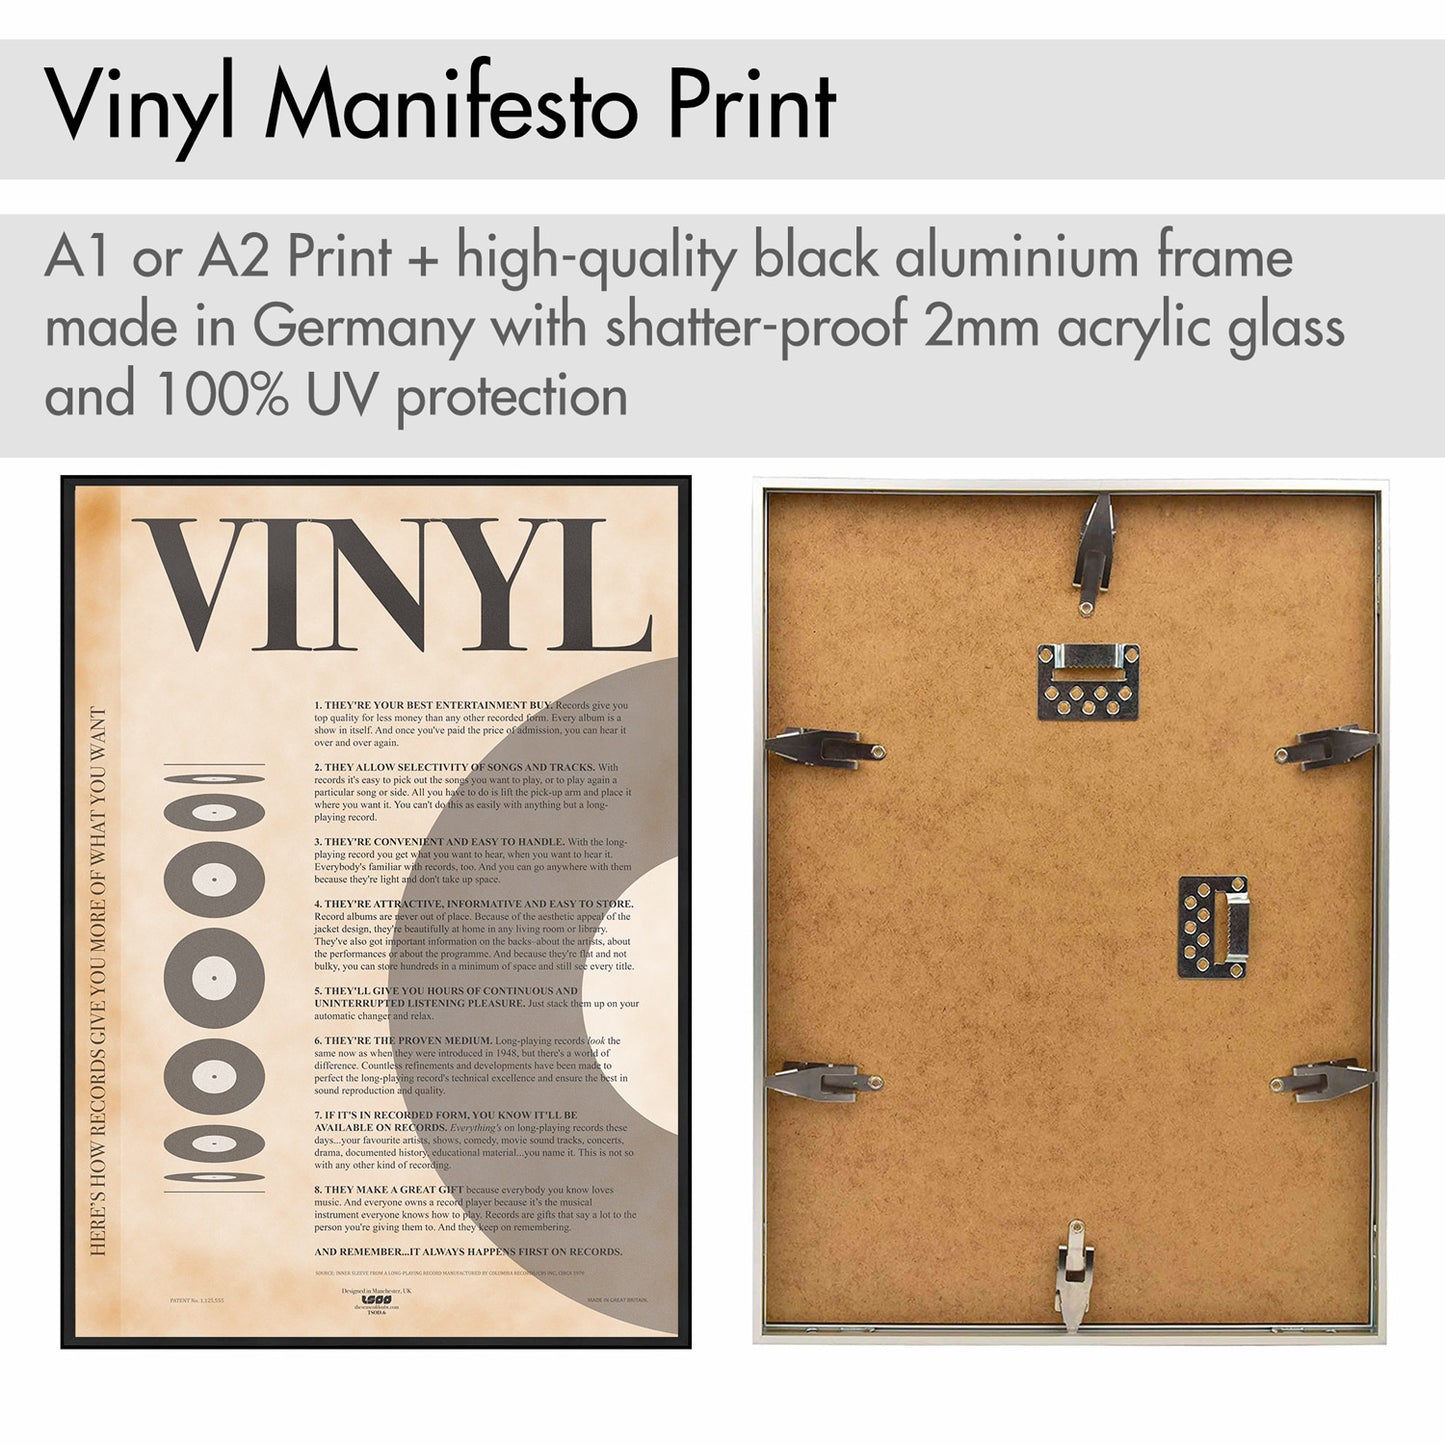 1960s Vinyl Record Manifesto - The Sense of Doubt - Vinyl Record 60s Manifesto - The Sense of Doubt